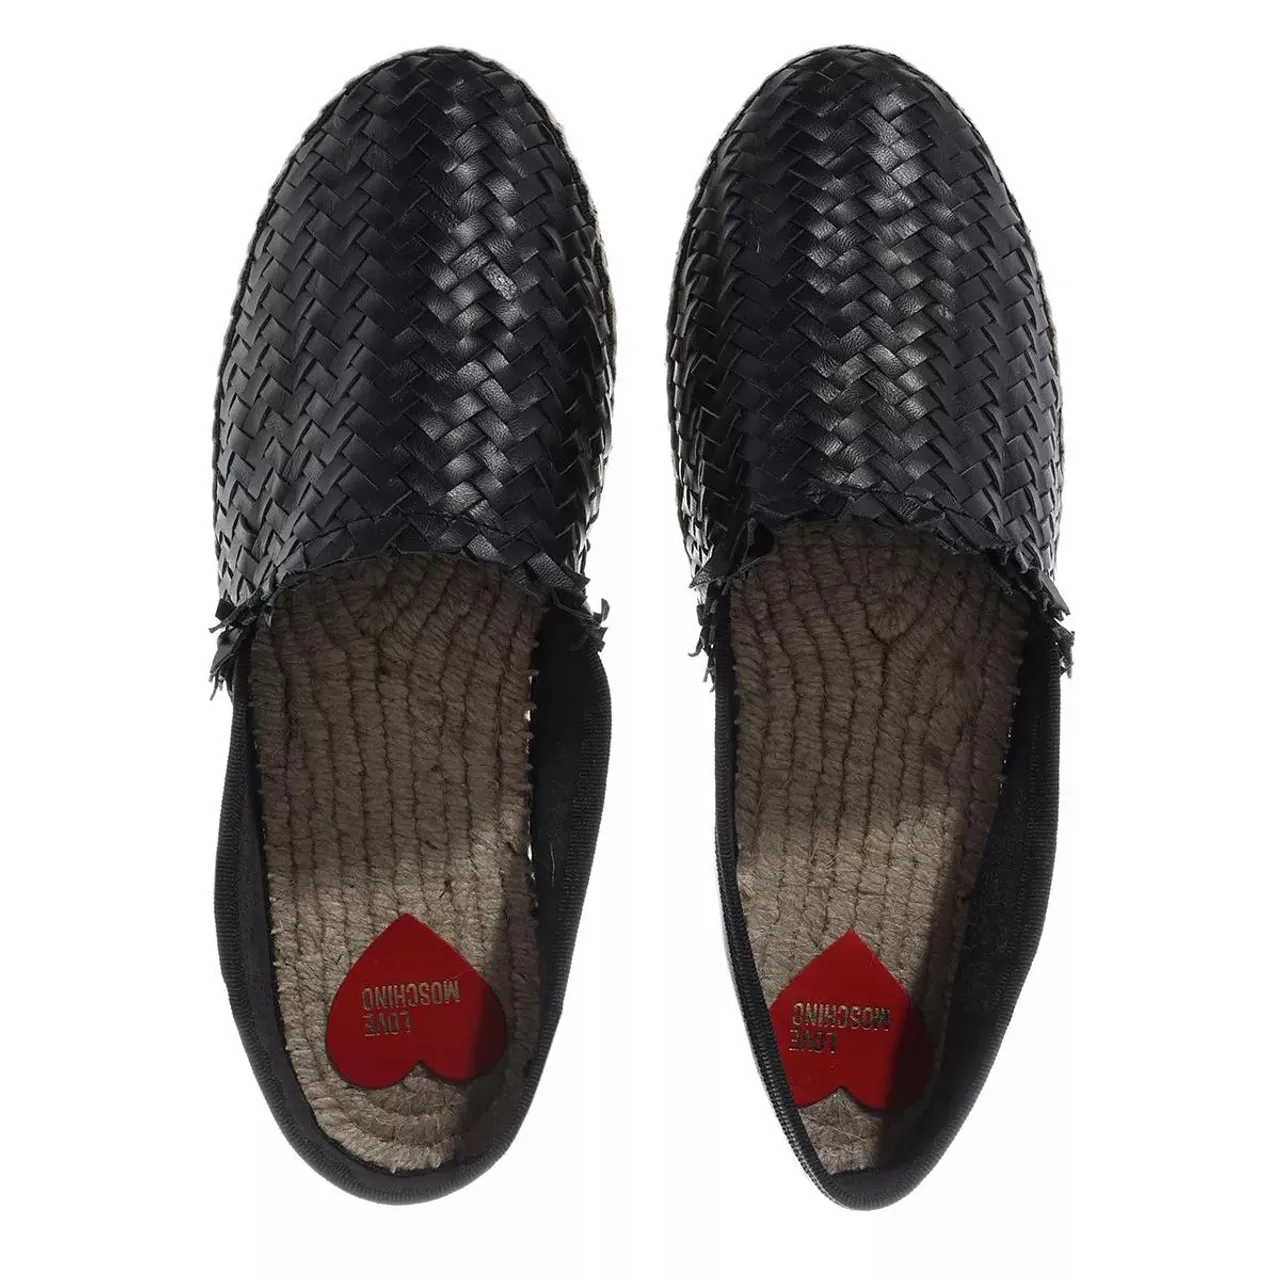 Love Moschino Sneakers - Scarpad Espa35 Intreccio - black - Sneakers for ladies